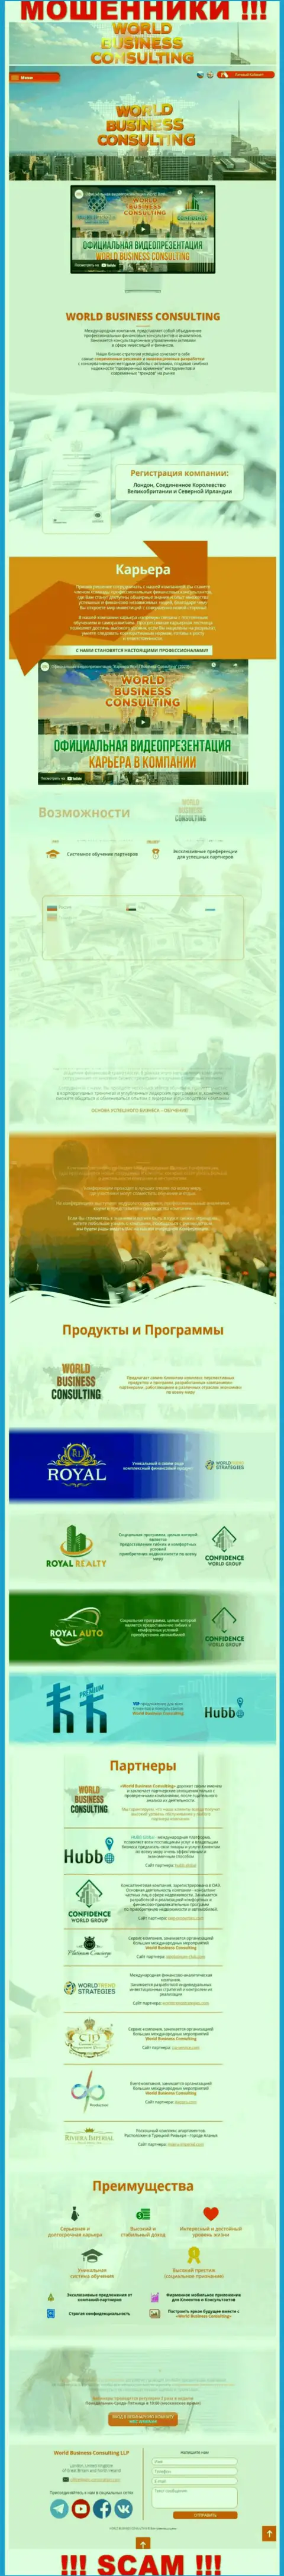 Сайт мошенников World Business Consulting